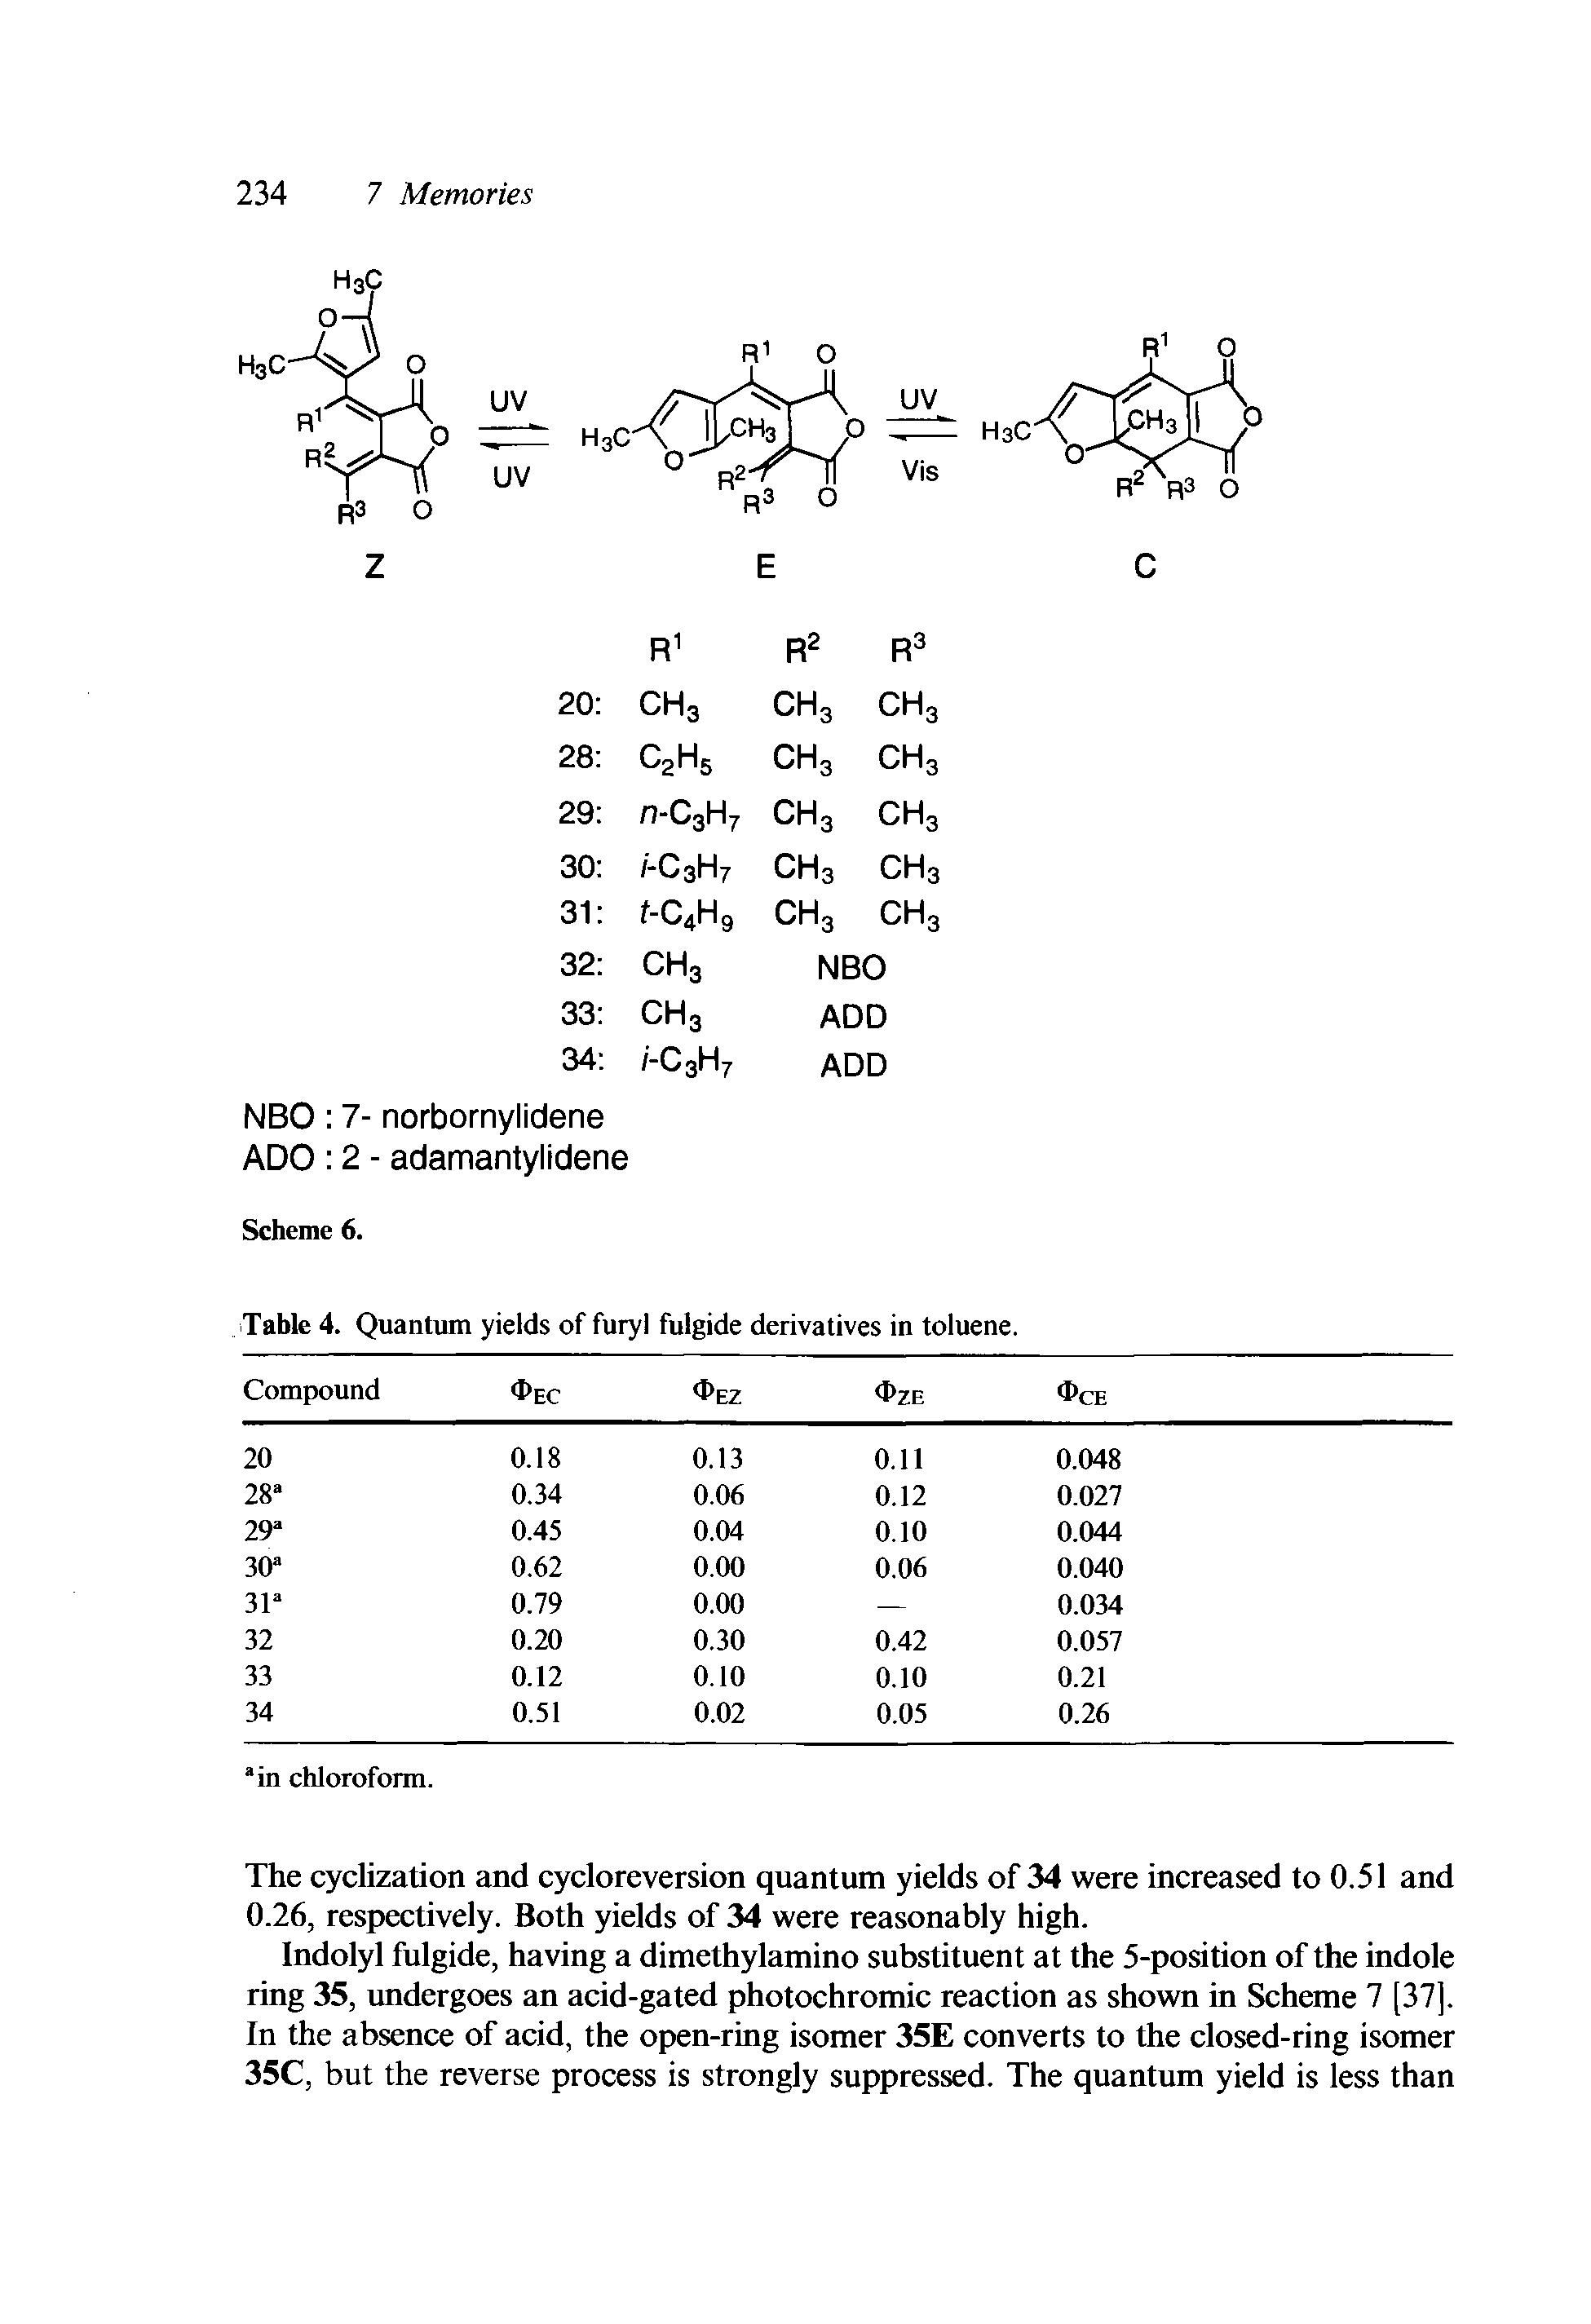 Table 4. Quantum yields of furyl fulgide derivatives in toluene.